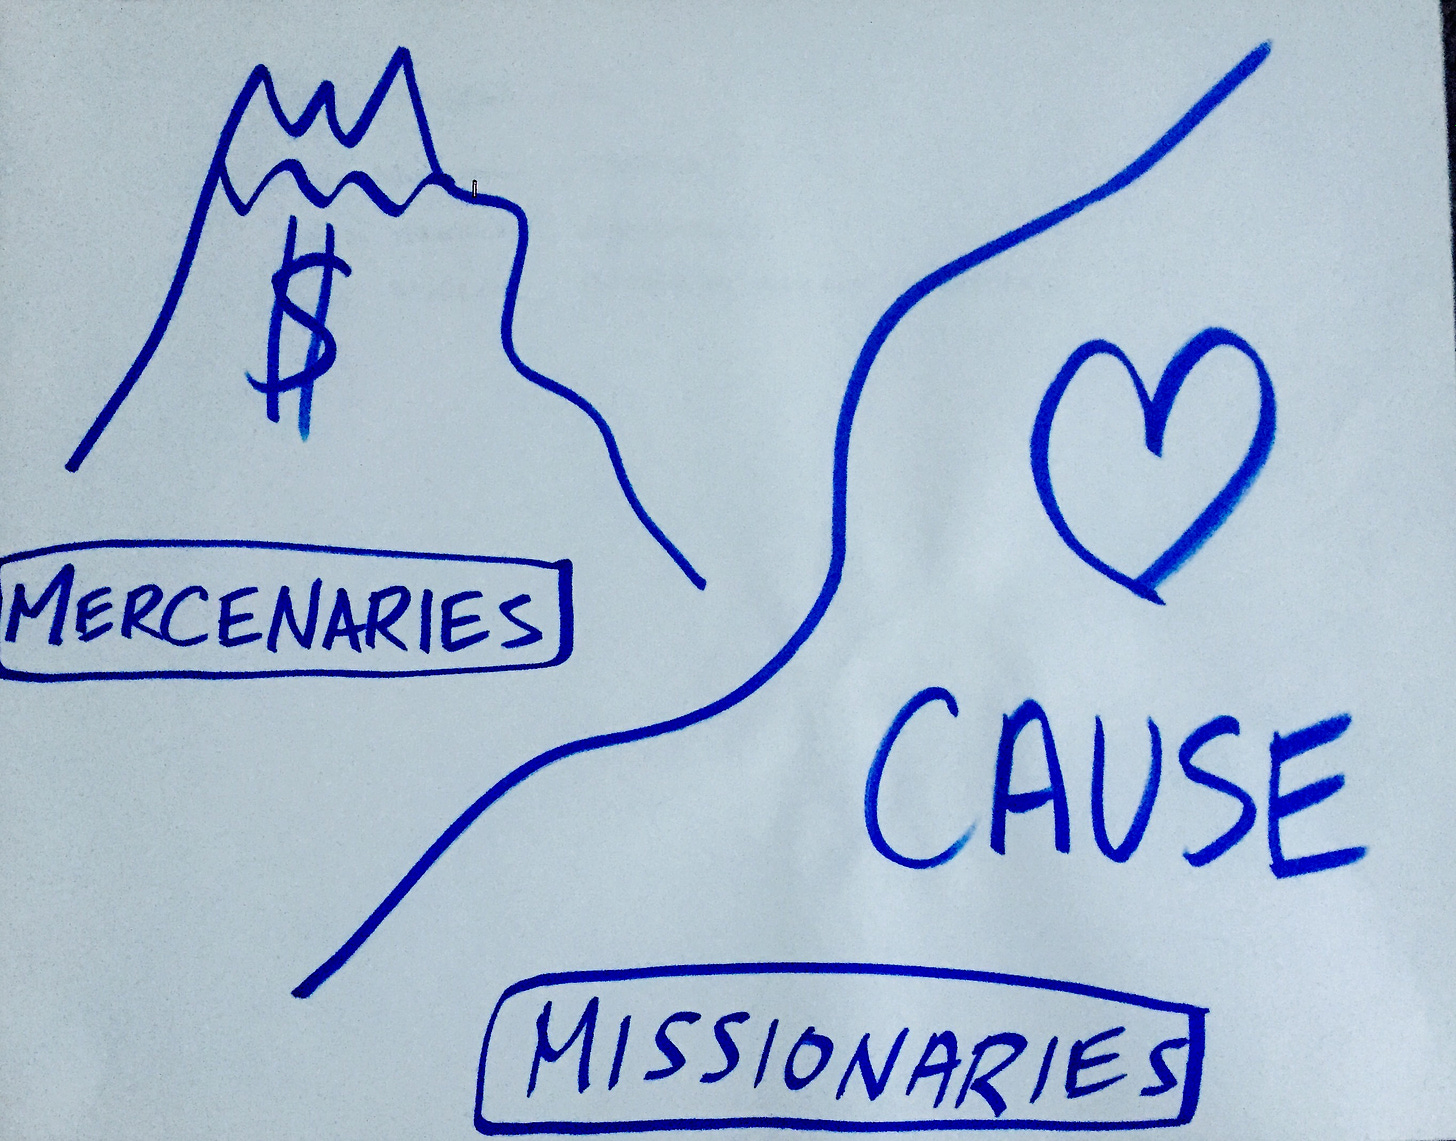 Image result for missionaries vs mercenaries